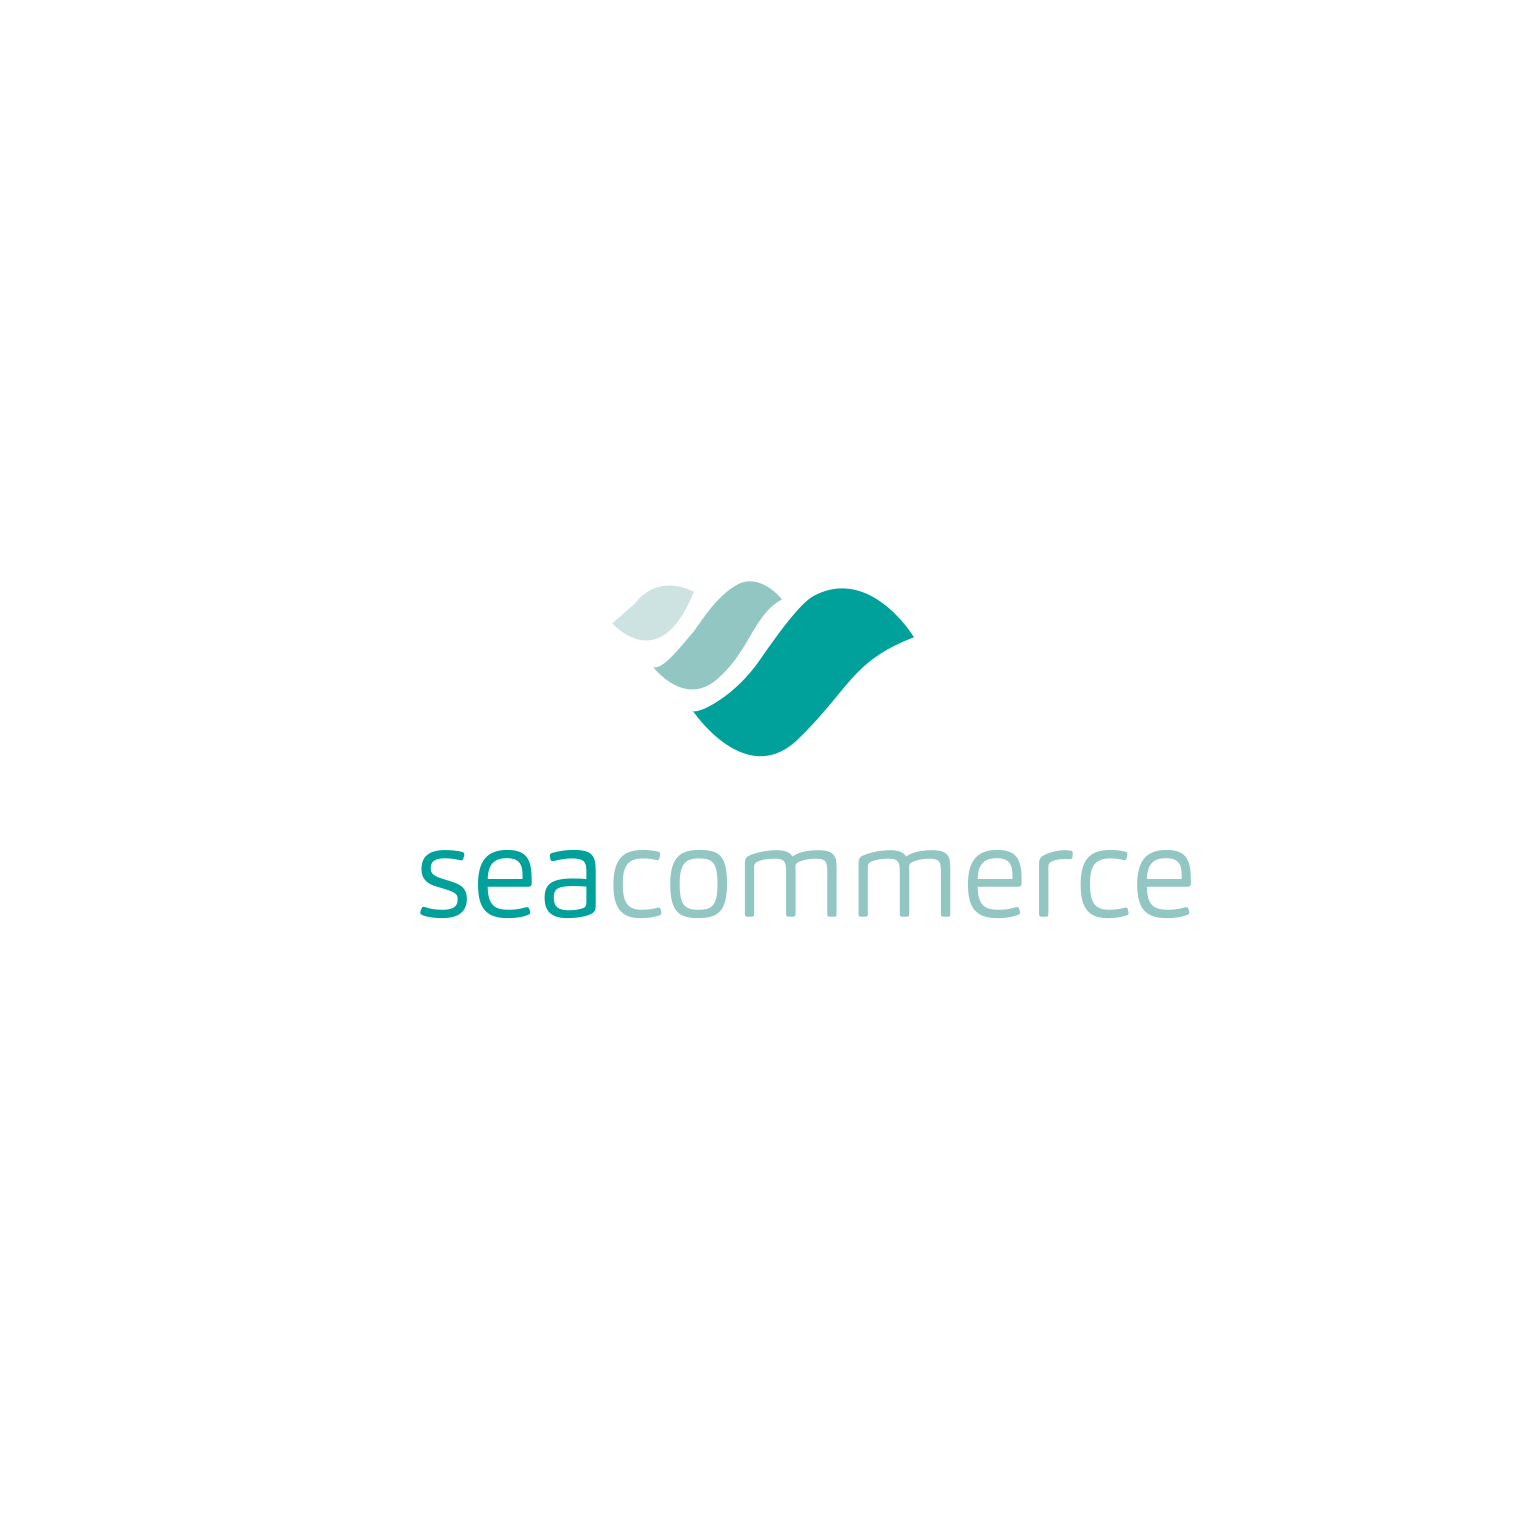 Seacommerce logo